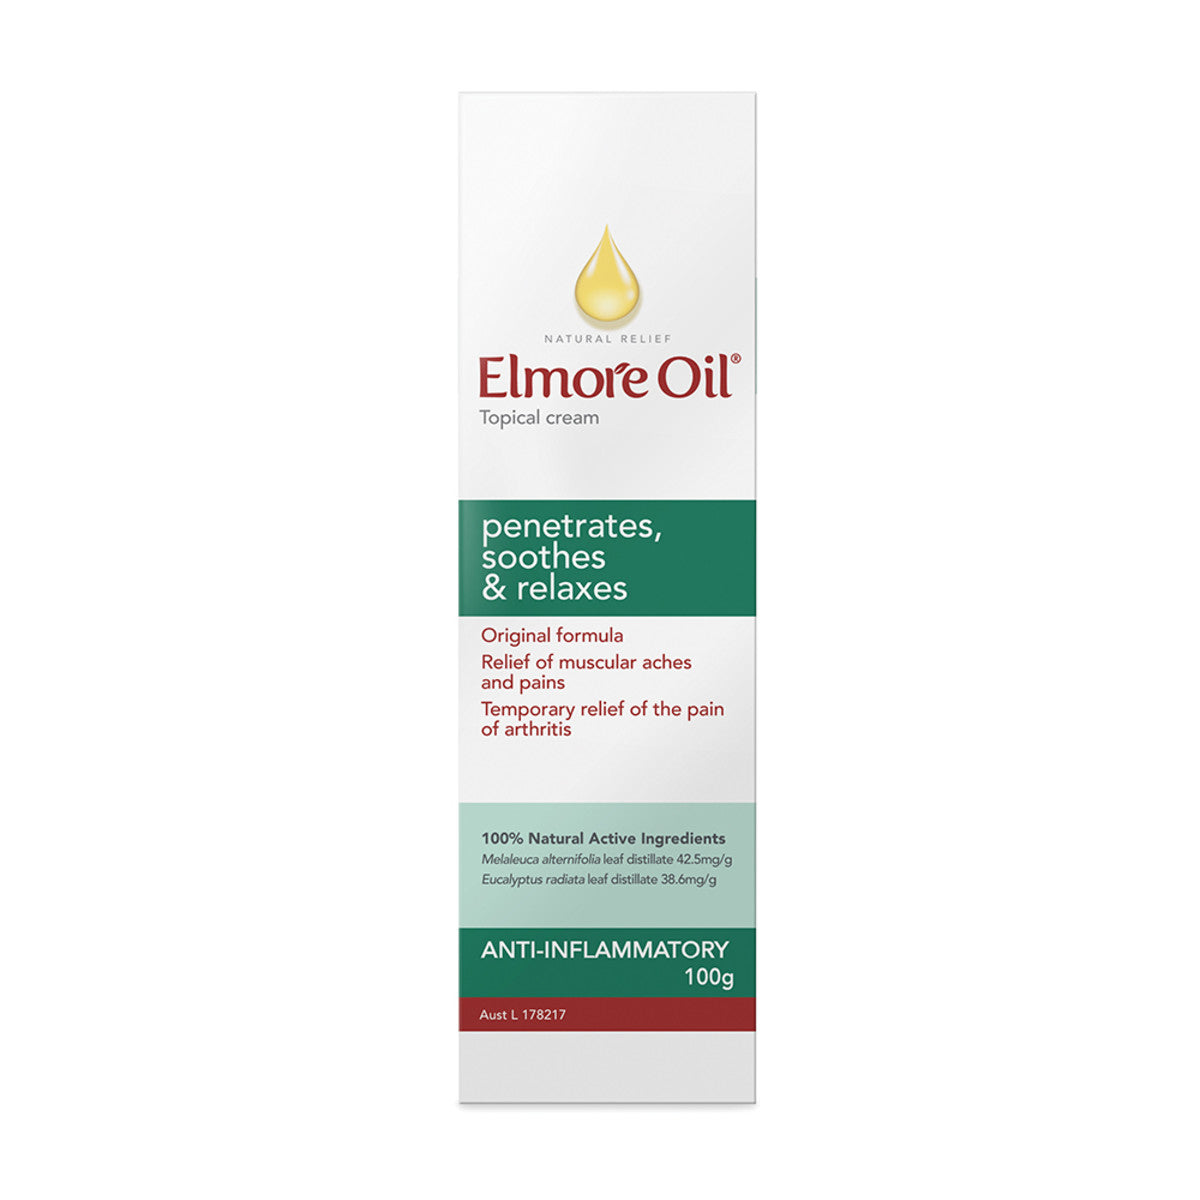 Elmore Oil - Natural Relief Topical Cream Anti-Inflammatory